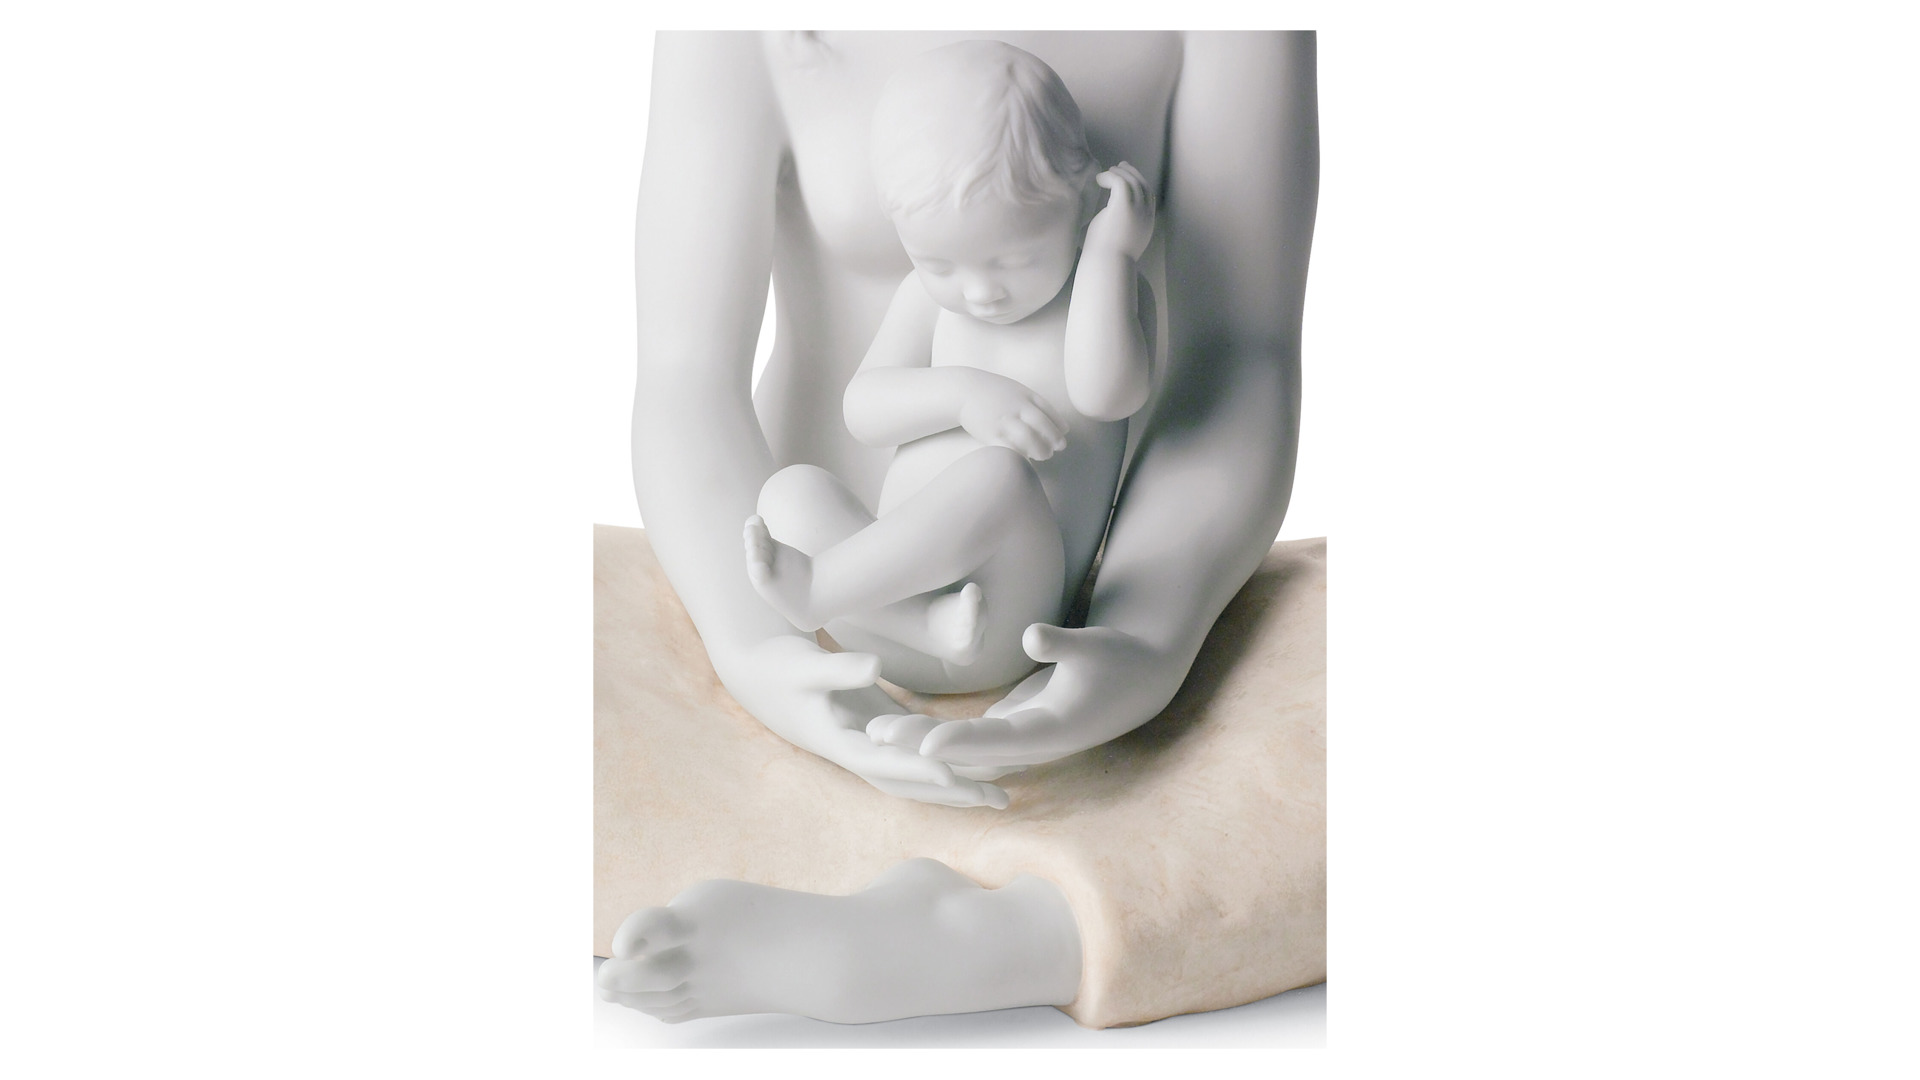 Фигурка Lladro Мать 22x22 см, фарфор